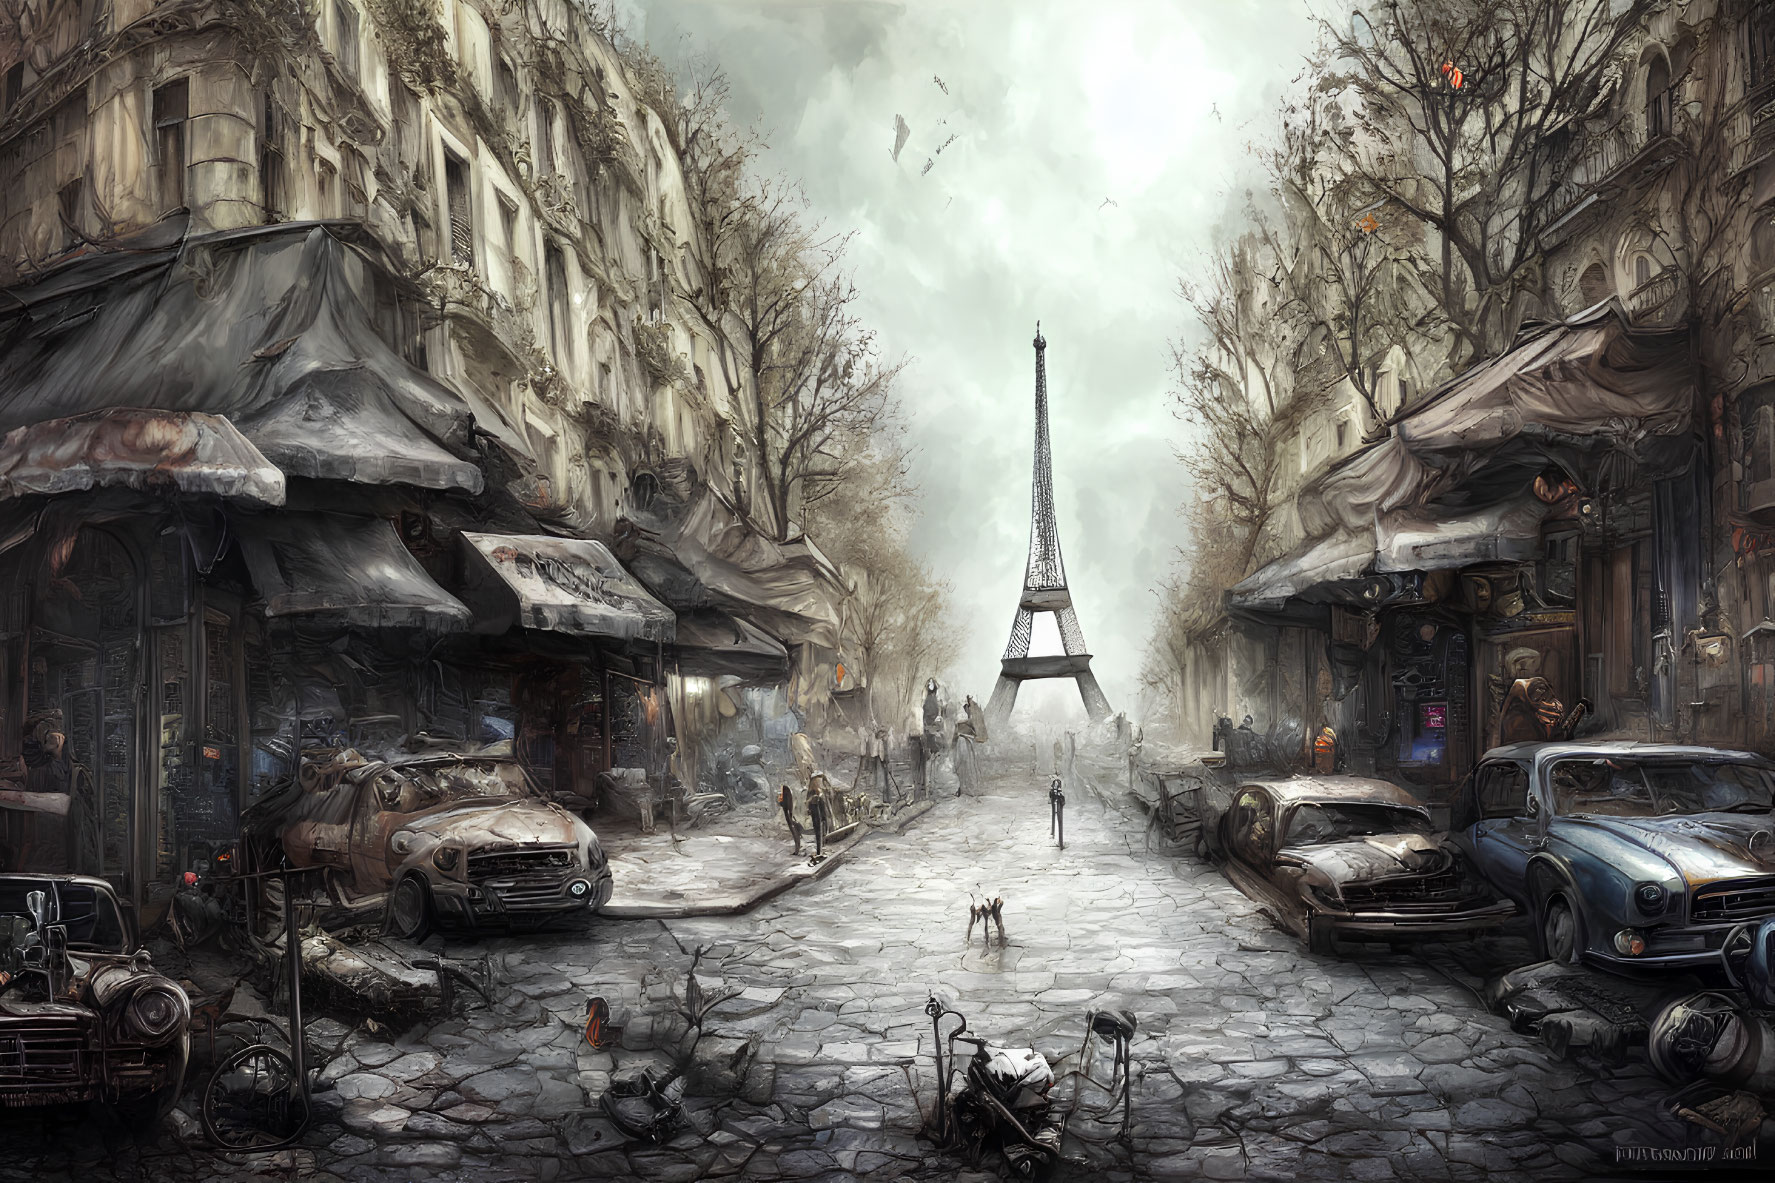 Dystopian Paris scene with Eiffel Tower, dilapidated cars, debris